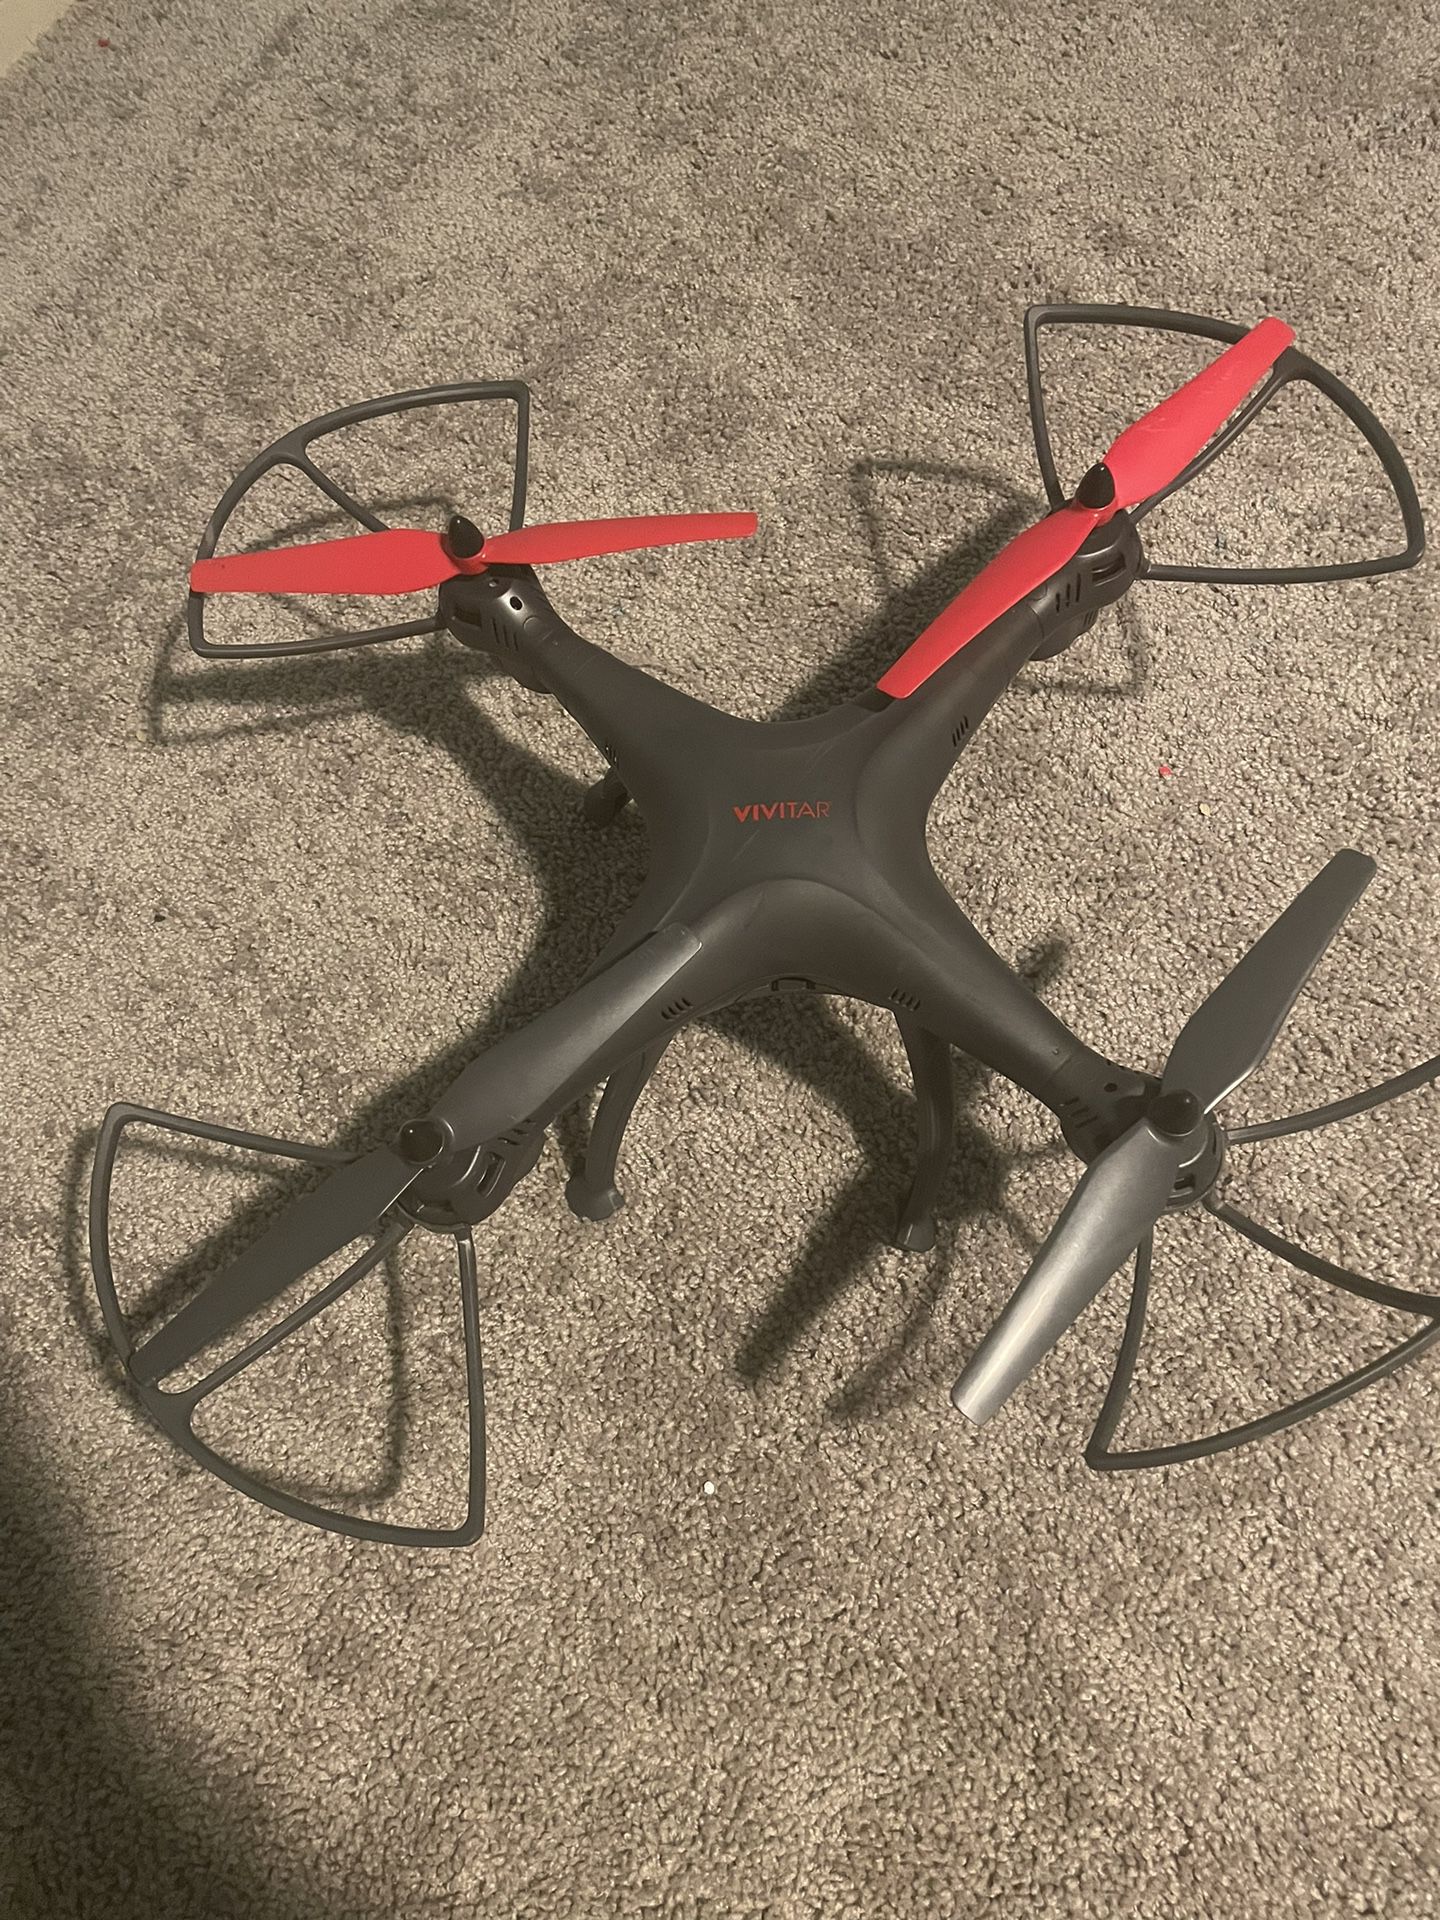 RC Drone with camera vivitar